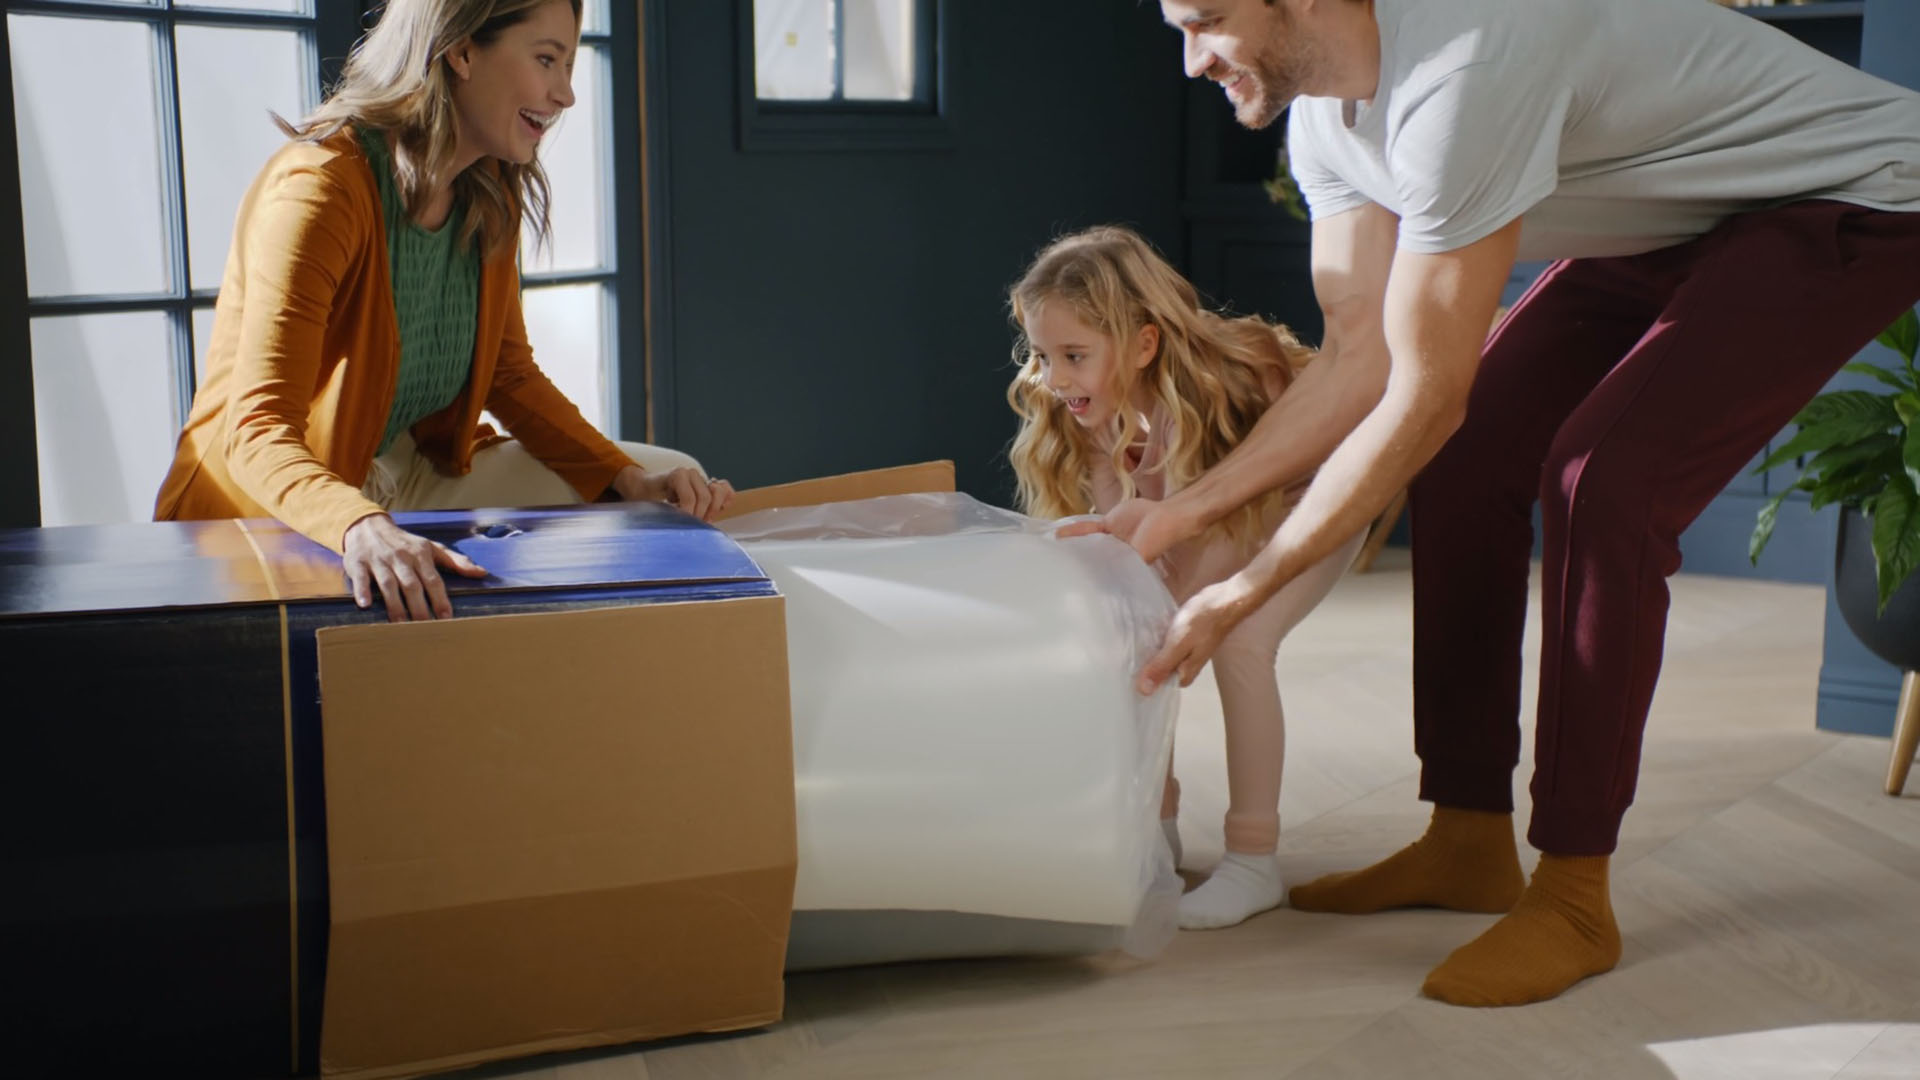 A family unboxing a Dreamcloud mattress in Whittier, California